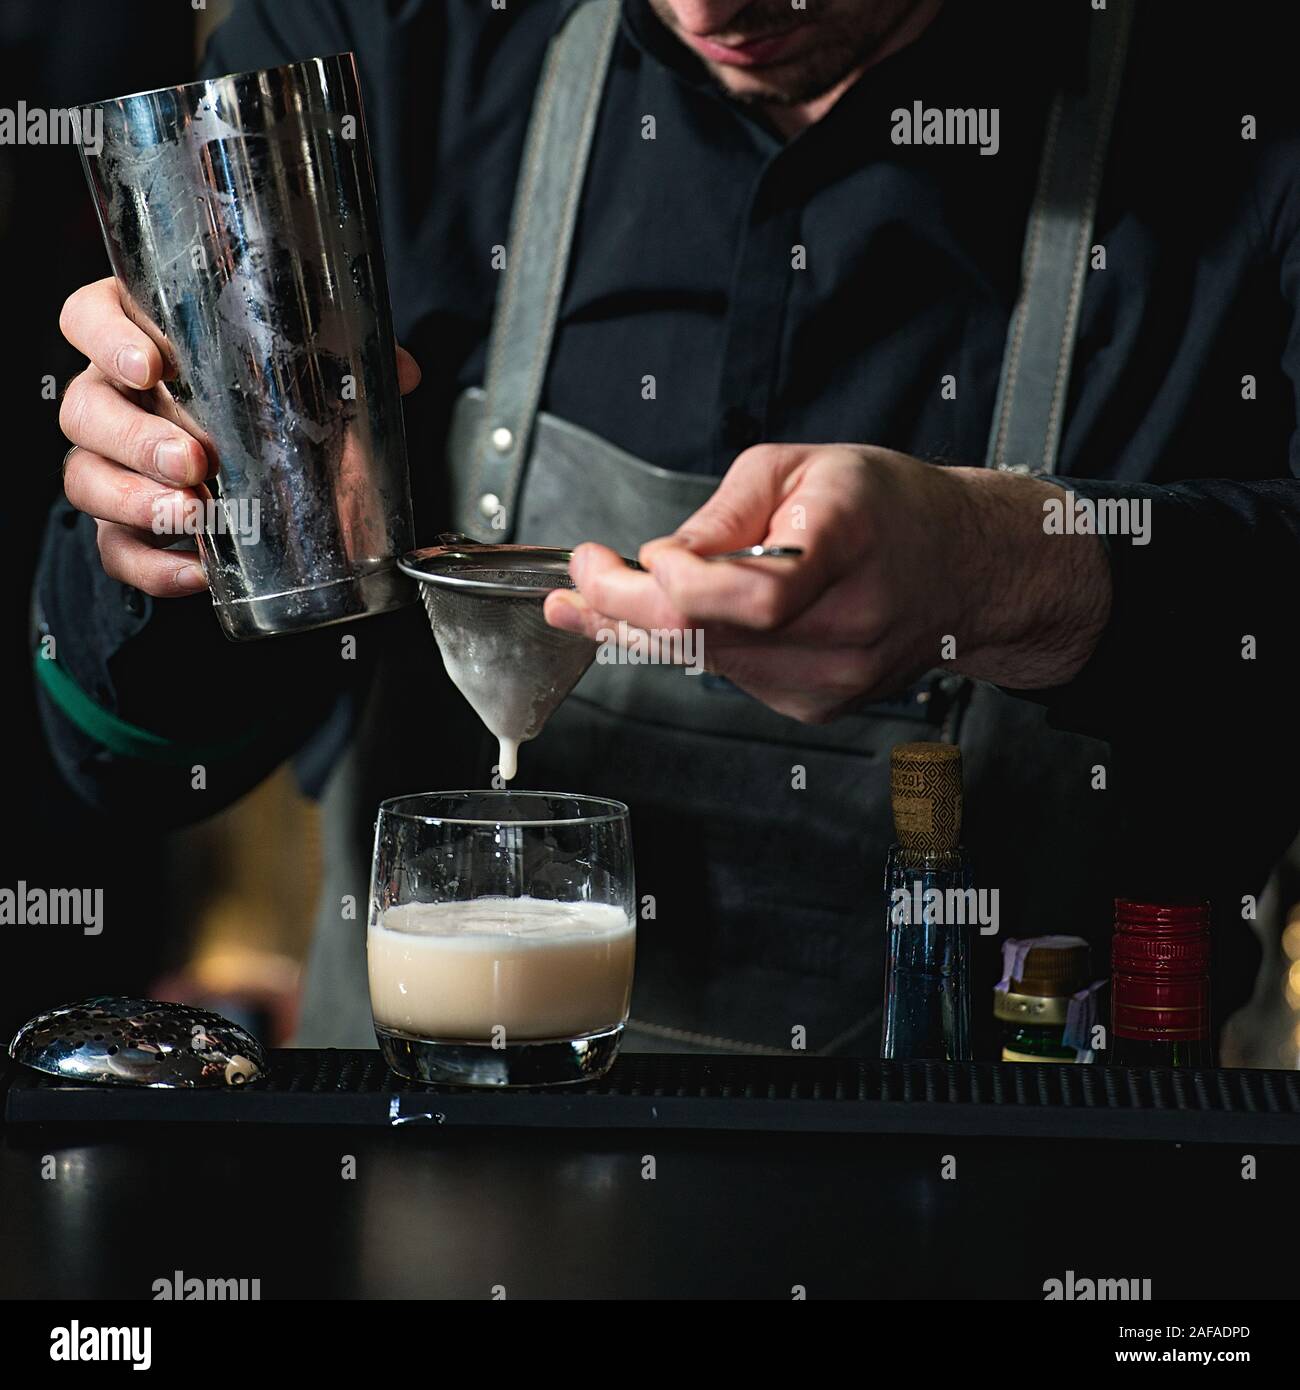 Metallic Barman Shaker on Wooden Table Stock Photo - Image of celebration,  nightclub: 111133180